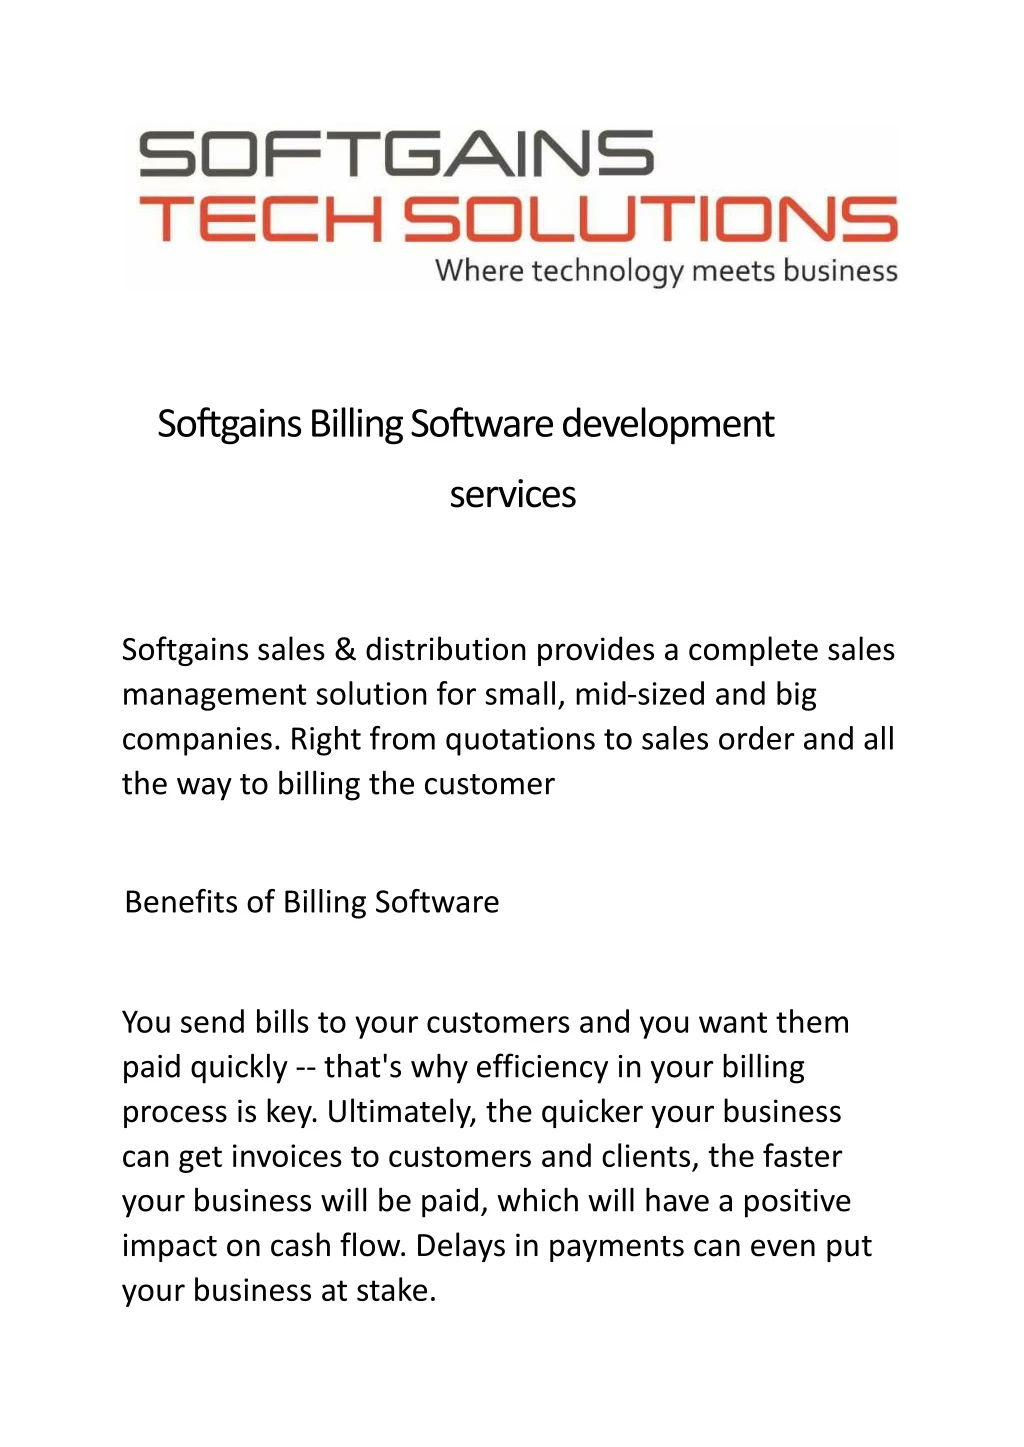 softgains billing software development services